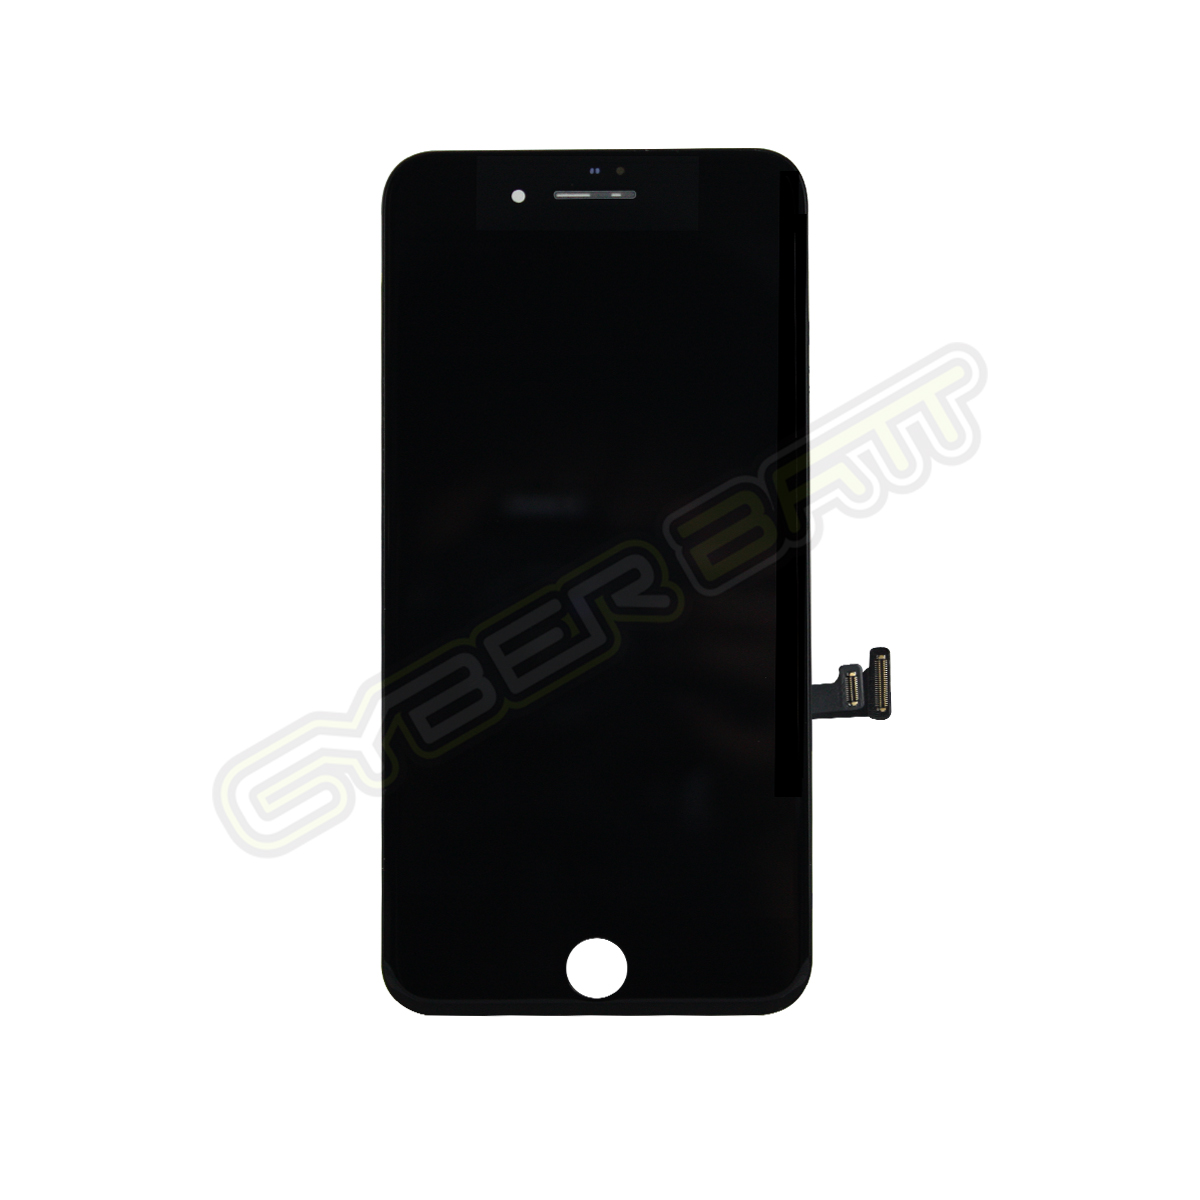 iPhone 7 Plus LCD Black หน้าจอไอโฟน 7 Plus สีดำ